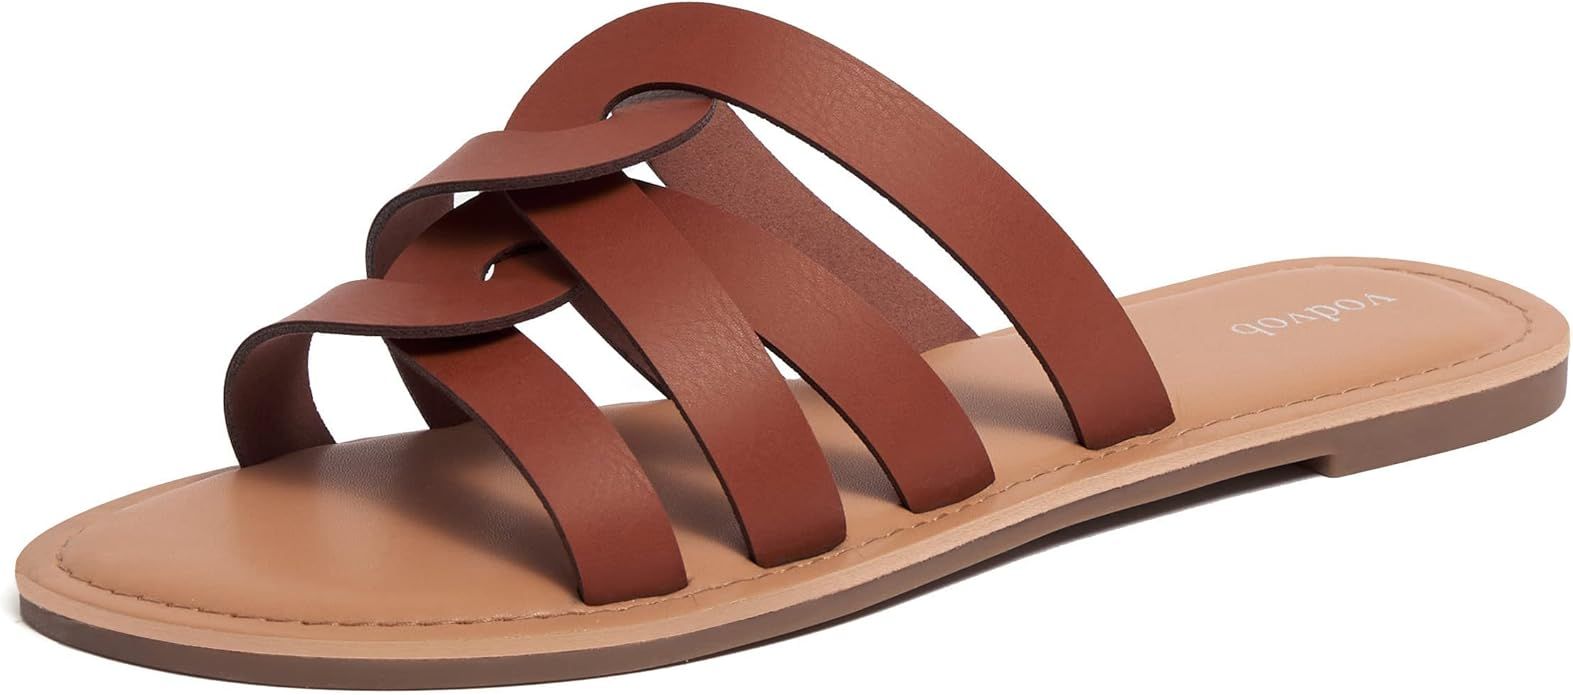 vodvob Women's Slide Sandals, Open Toe Slip On Flat Sandals, Cross Strap Casual Summer Shoes | Amazon (US)